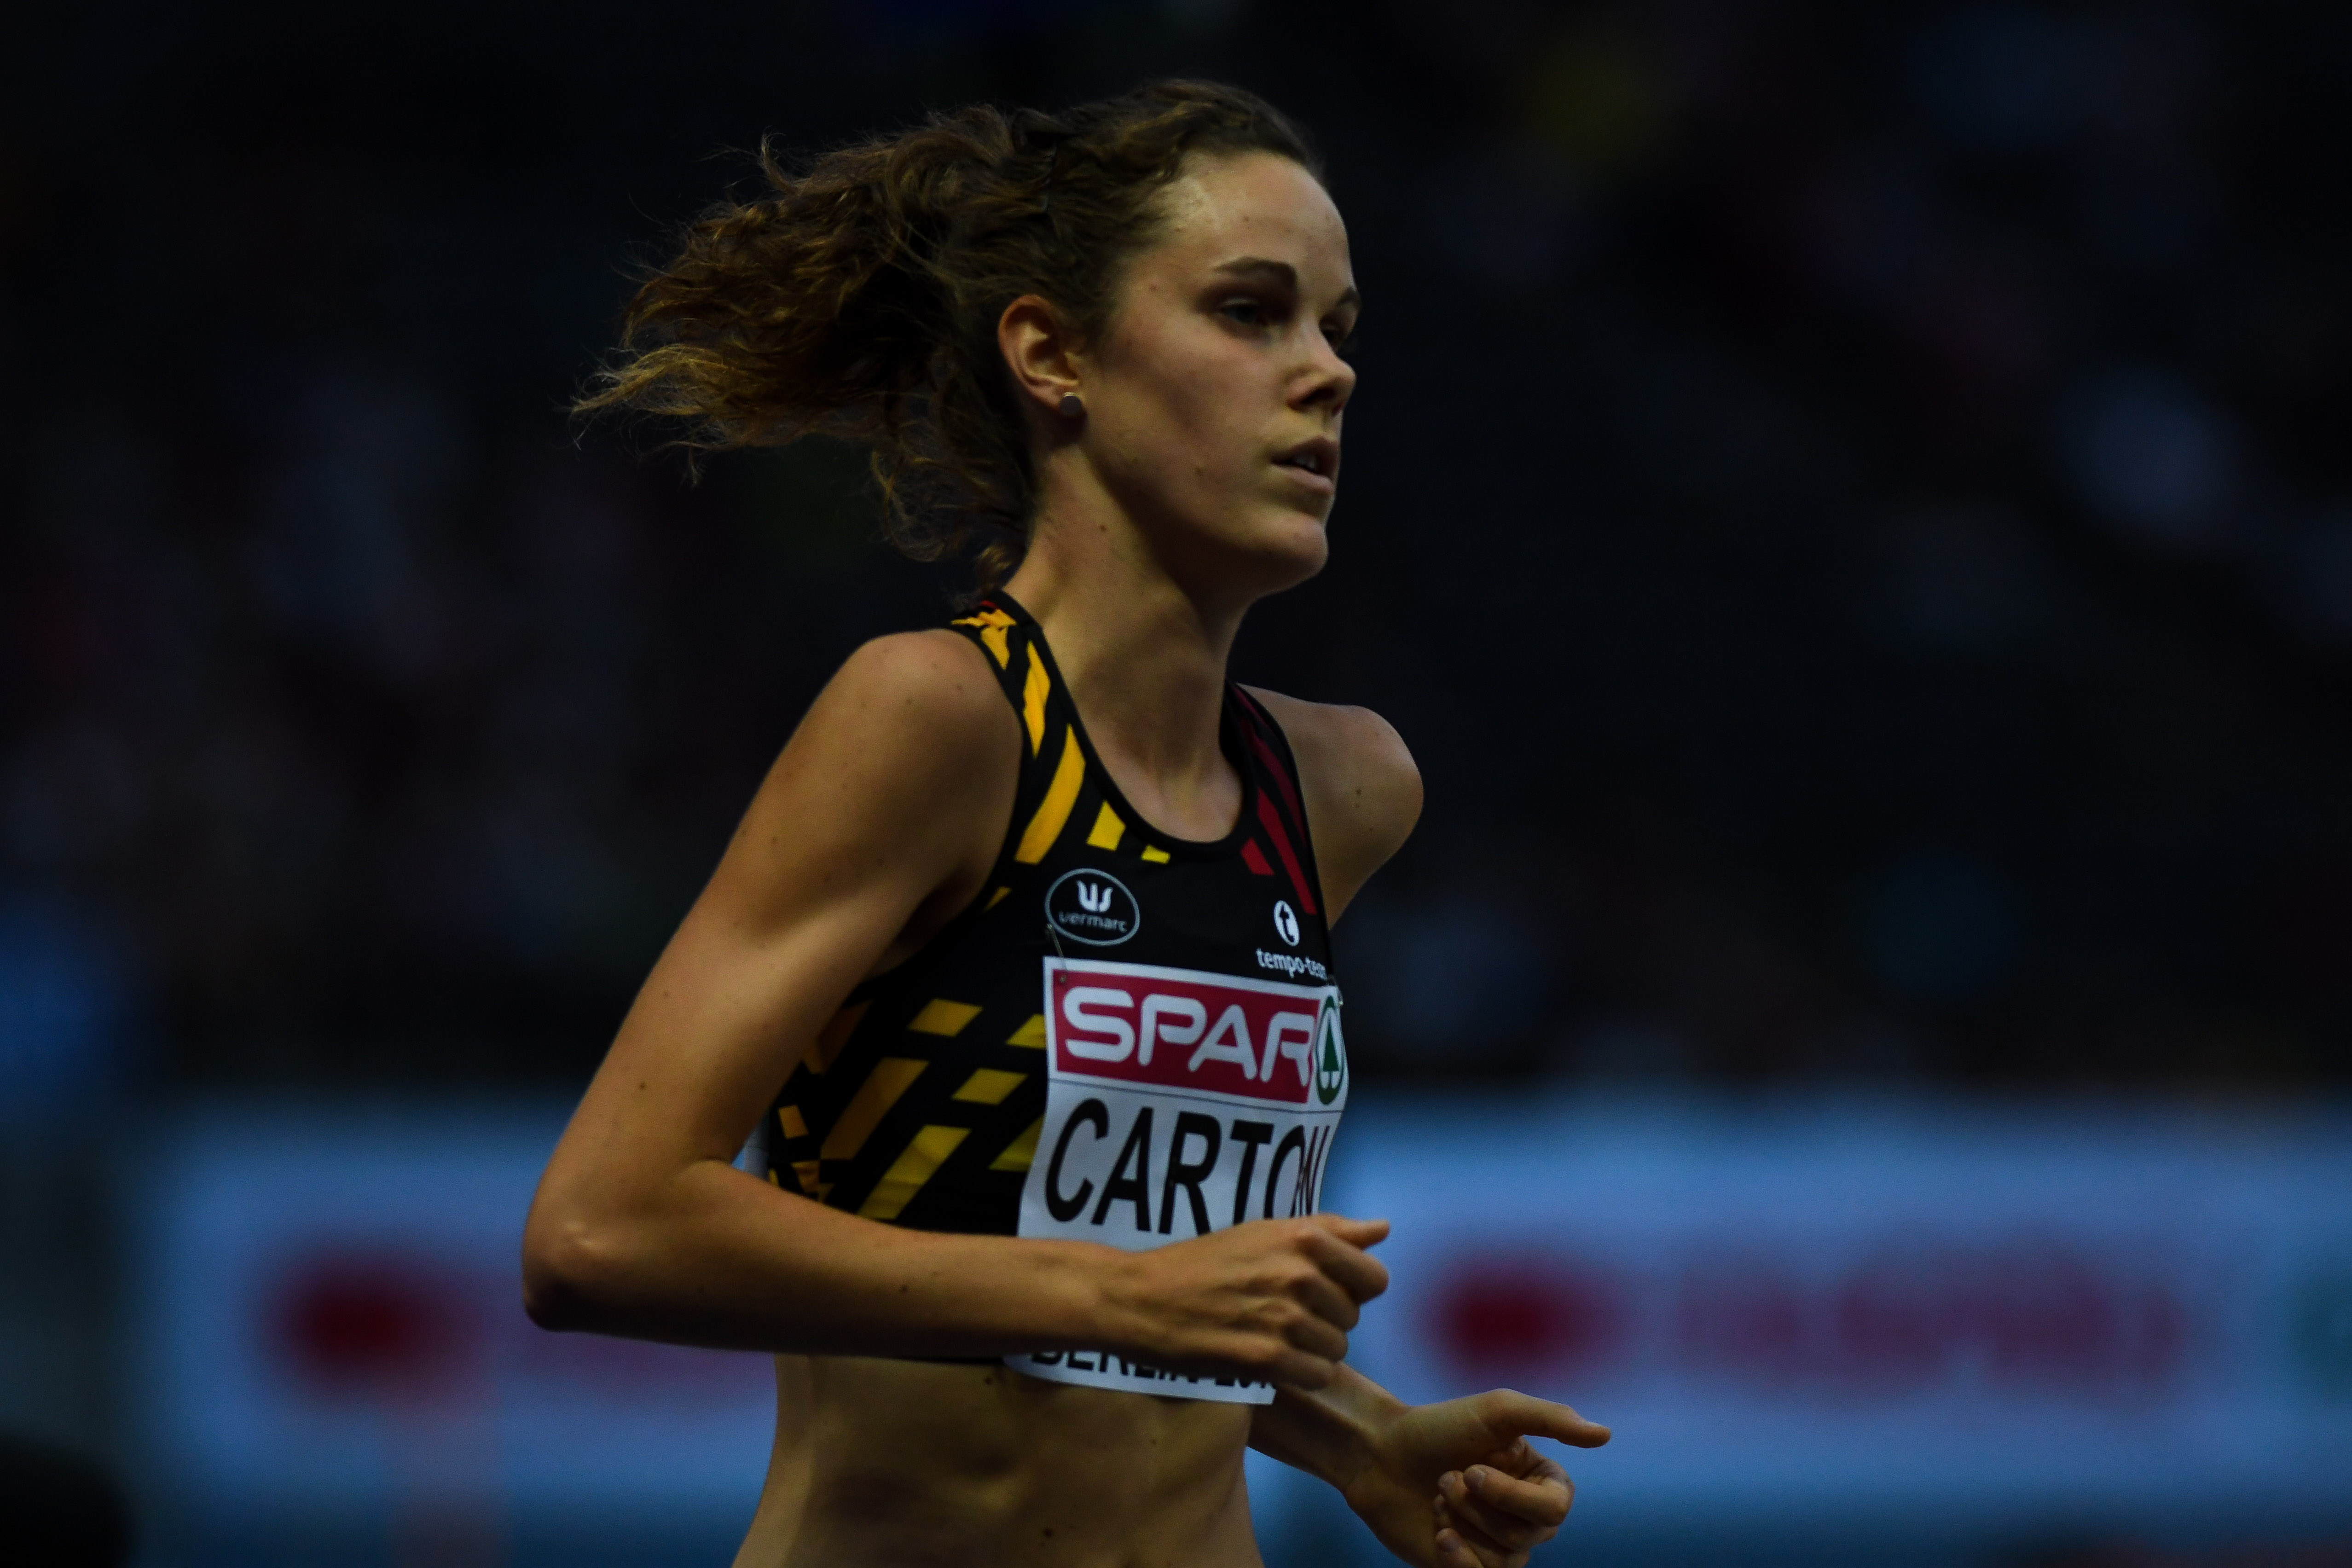 Louise Carton 5000m Berlijn 2018